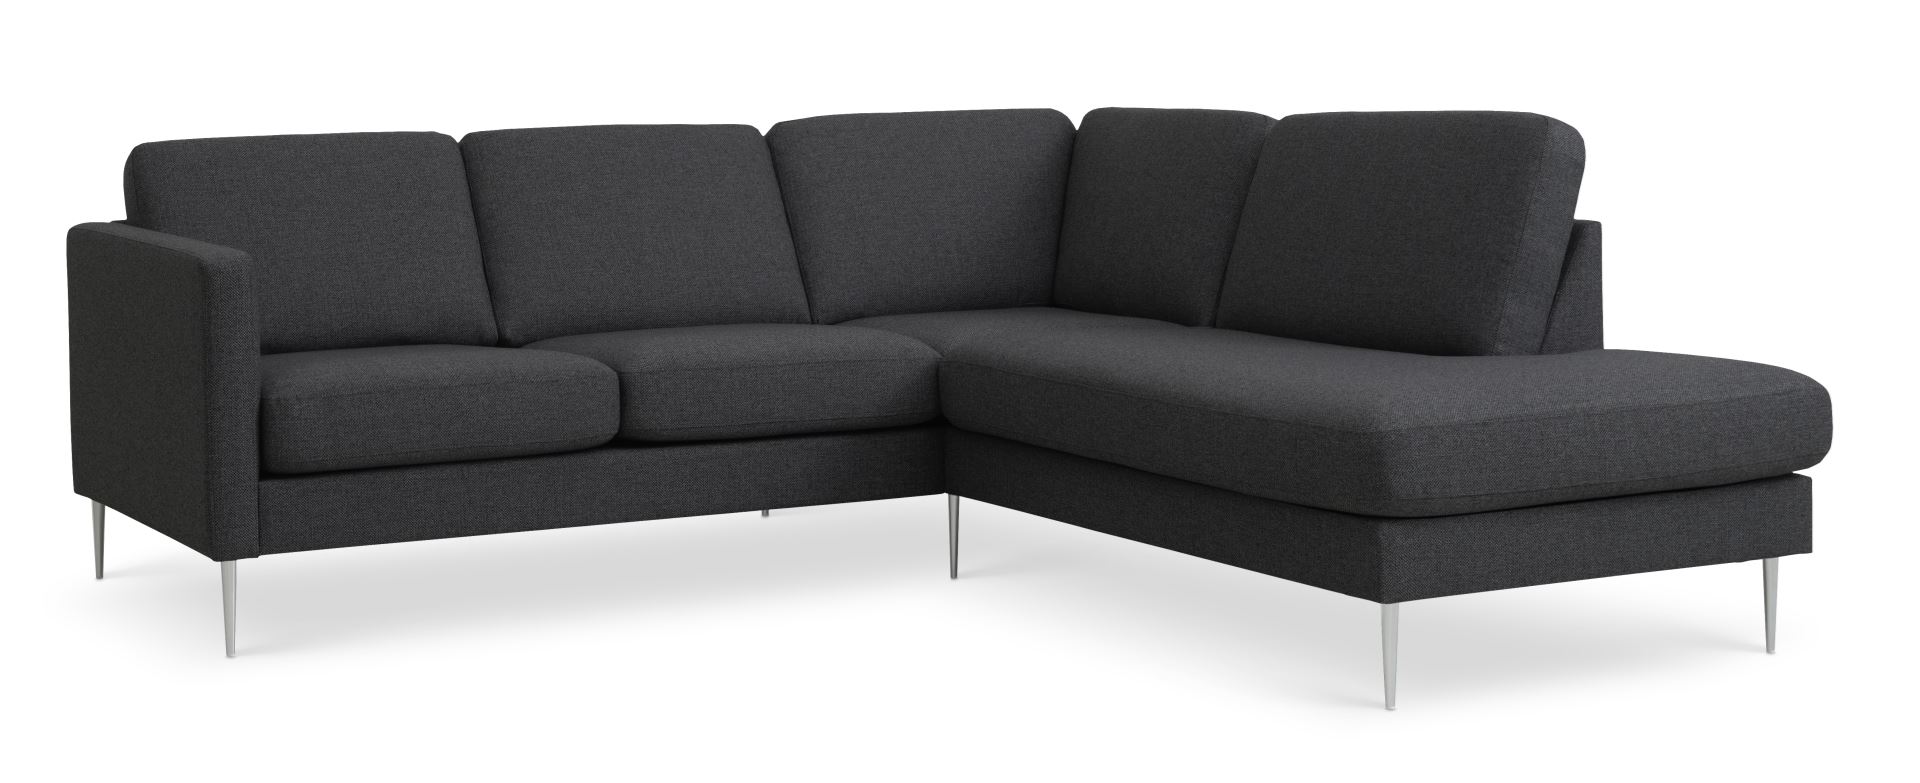 Ask sæt 53 lille OE sofa, m. højre chaiselong - antracitgrå polyester stof og børstet aluminium